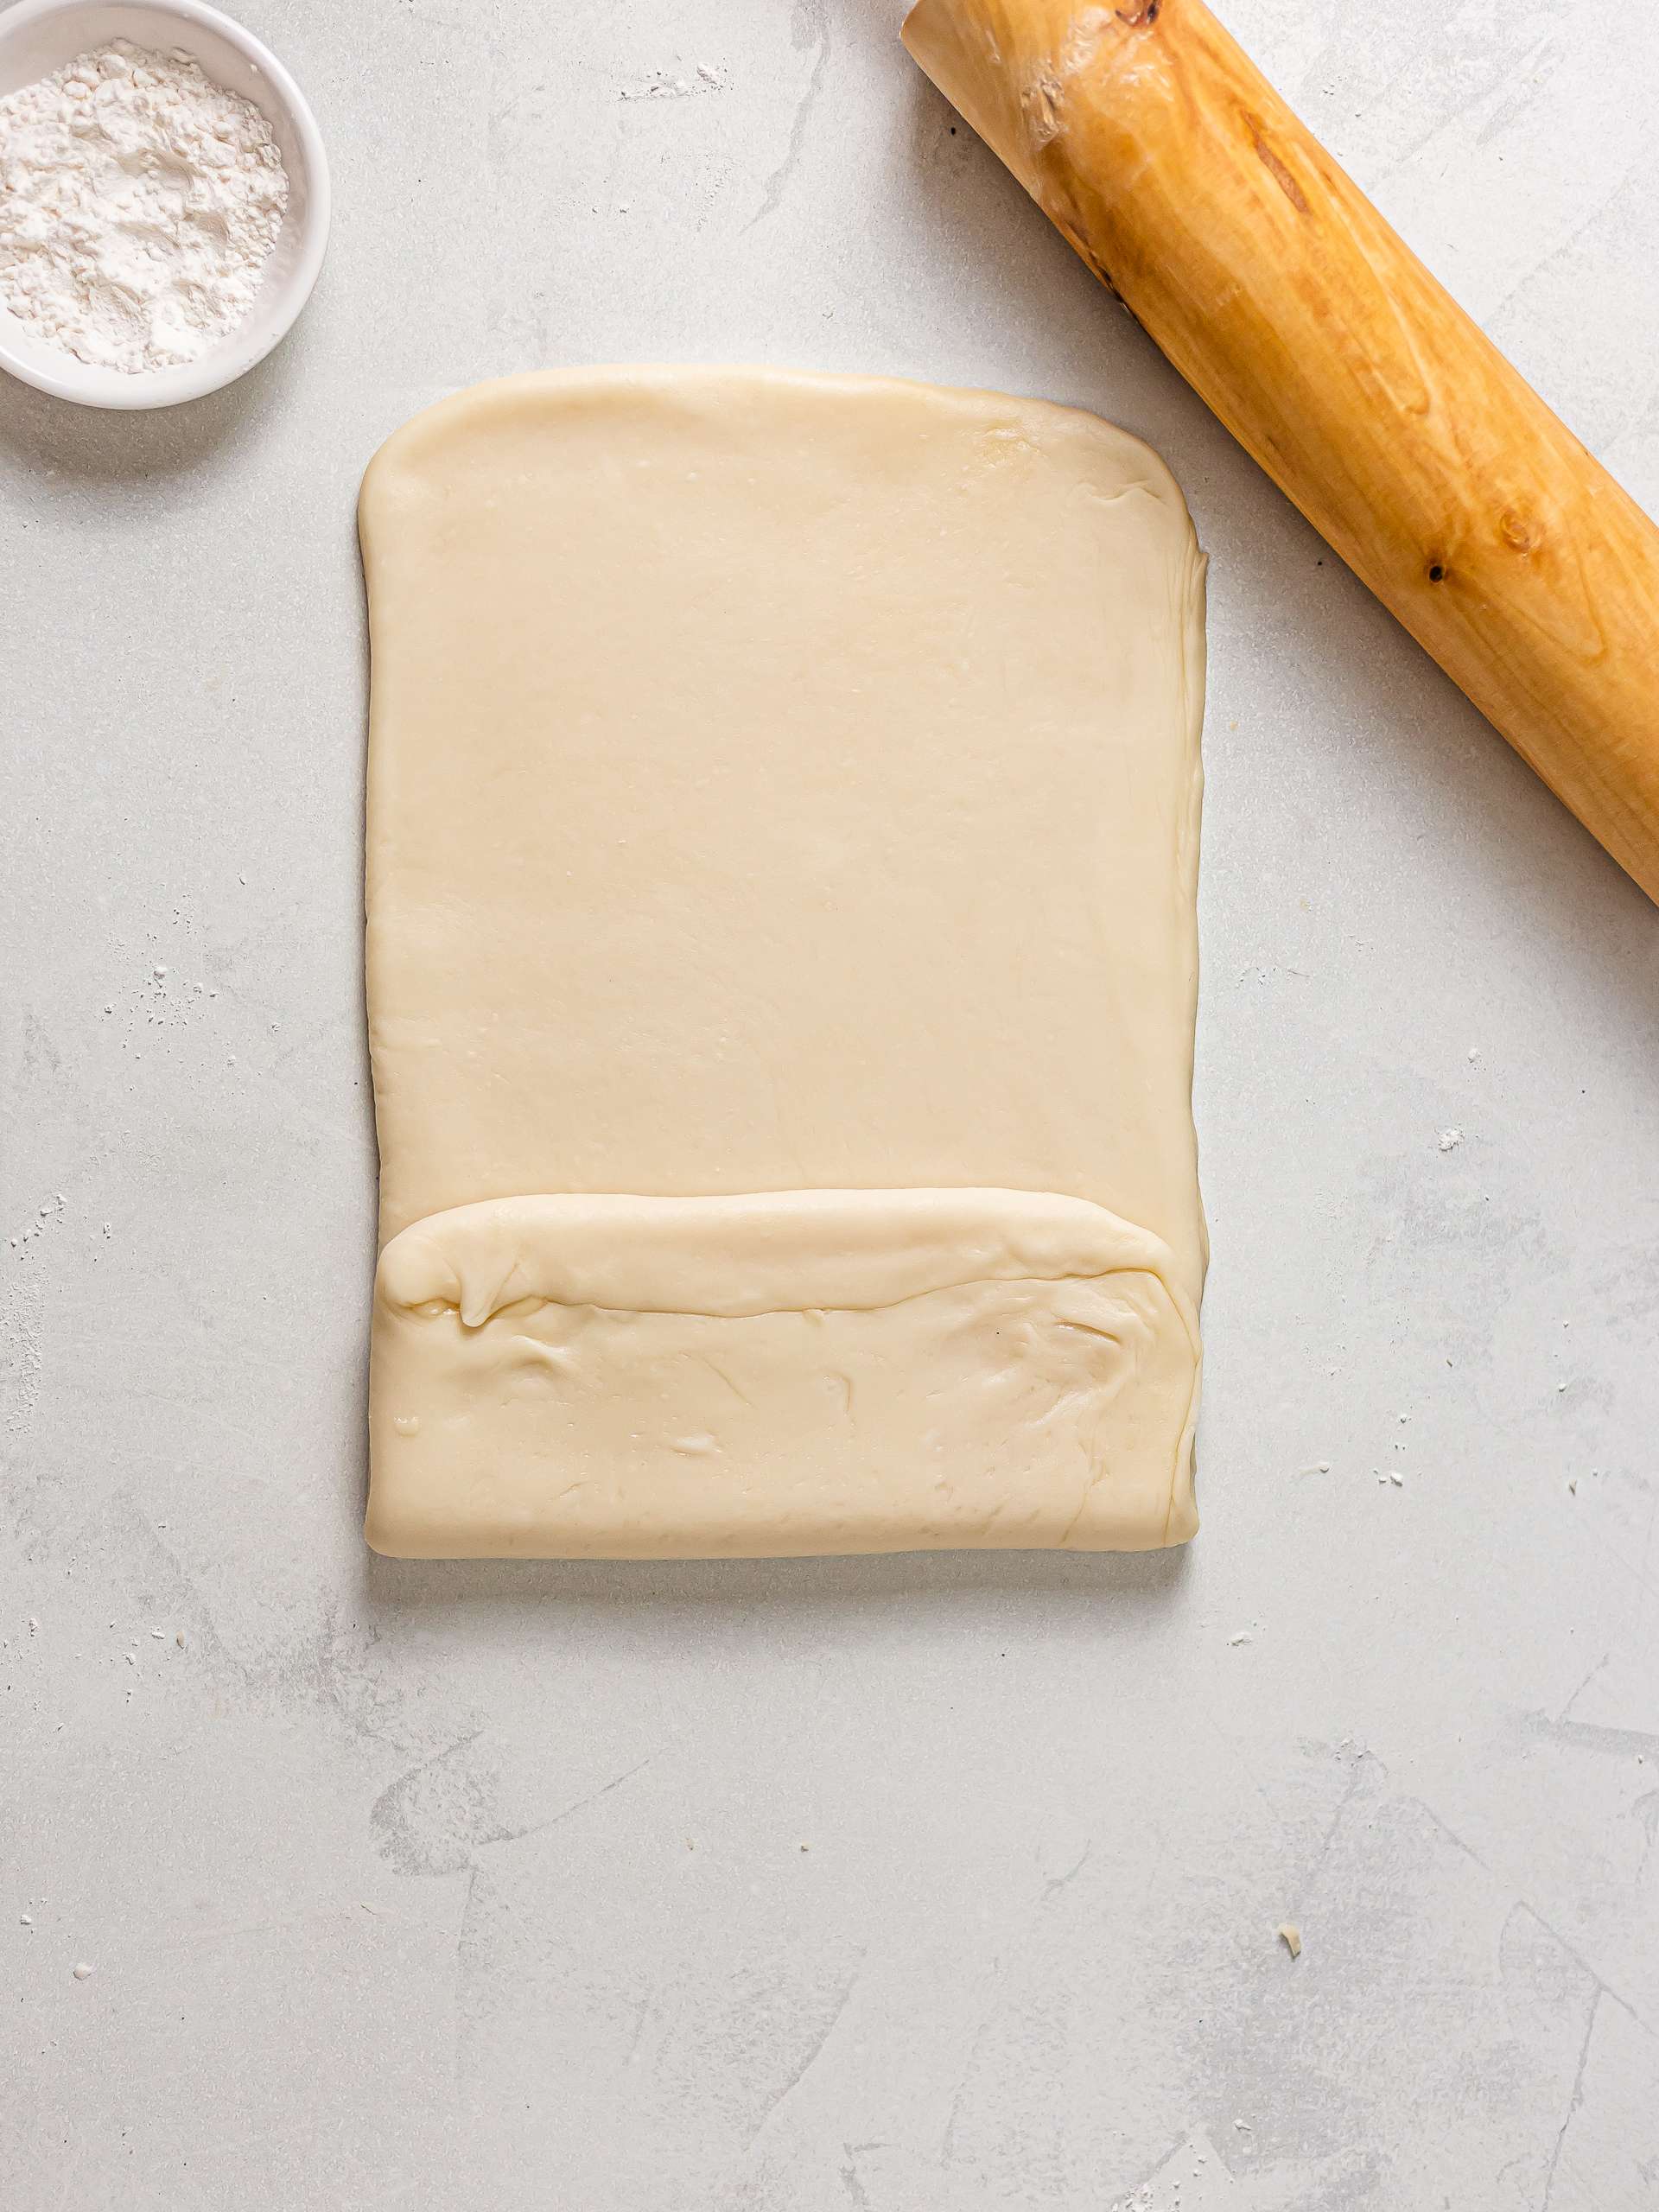 dough bottom folded for pastry dough lamination